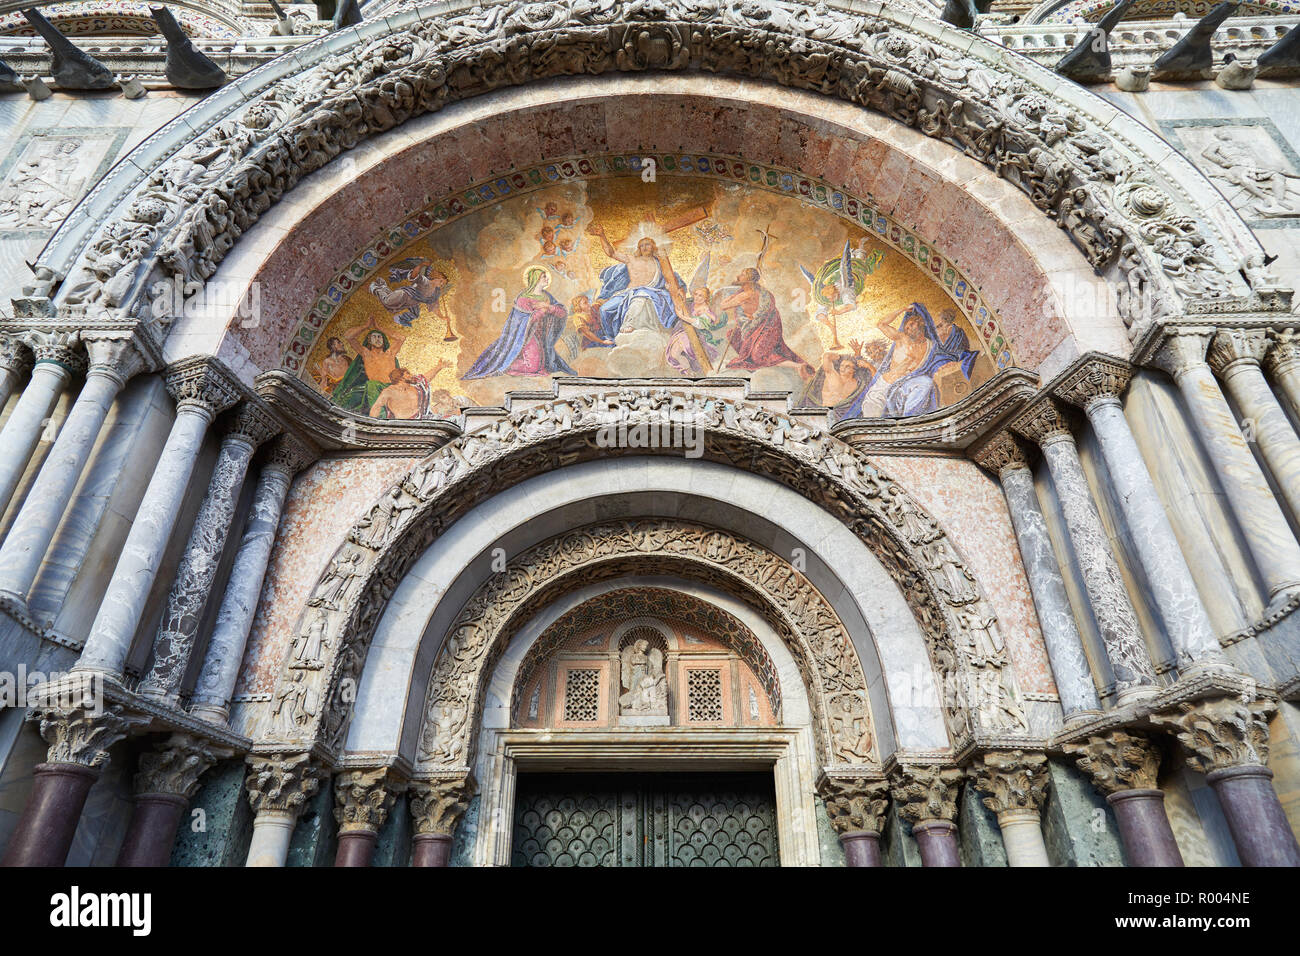 Der heilige Markus Basilika Fassade details mit goldenen, bunten Mosaiken, Marmorsäulen und Skulpturen in Venedig, Italien Stockfoto